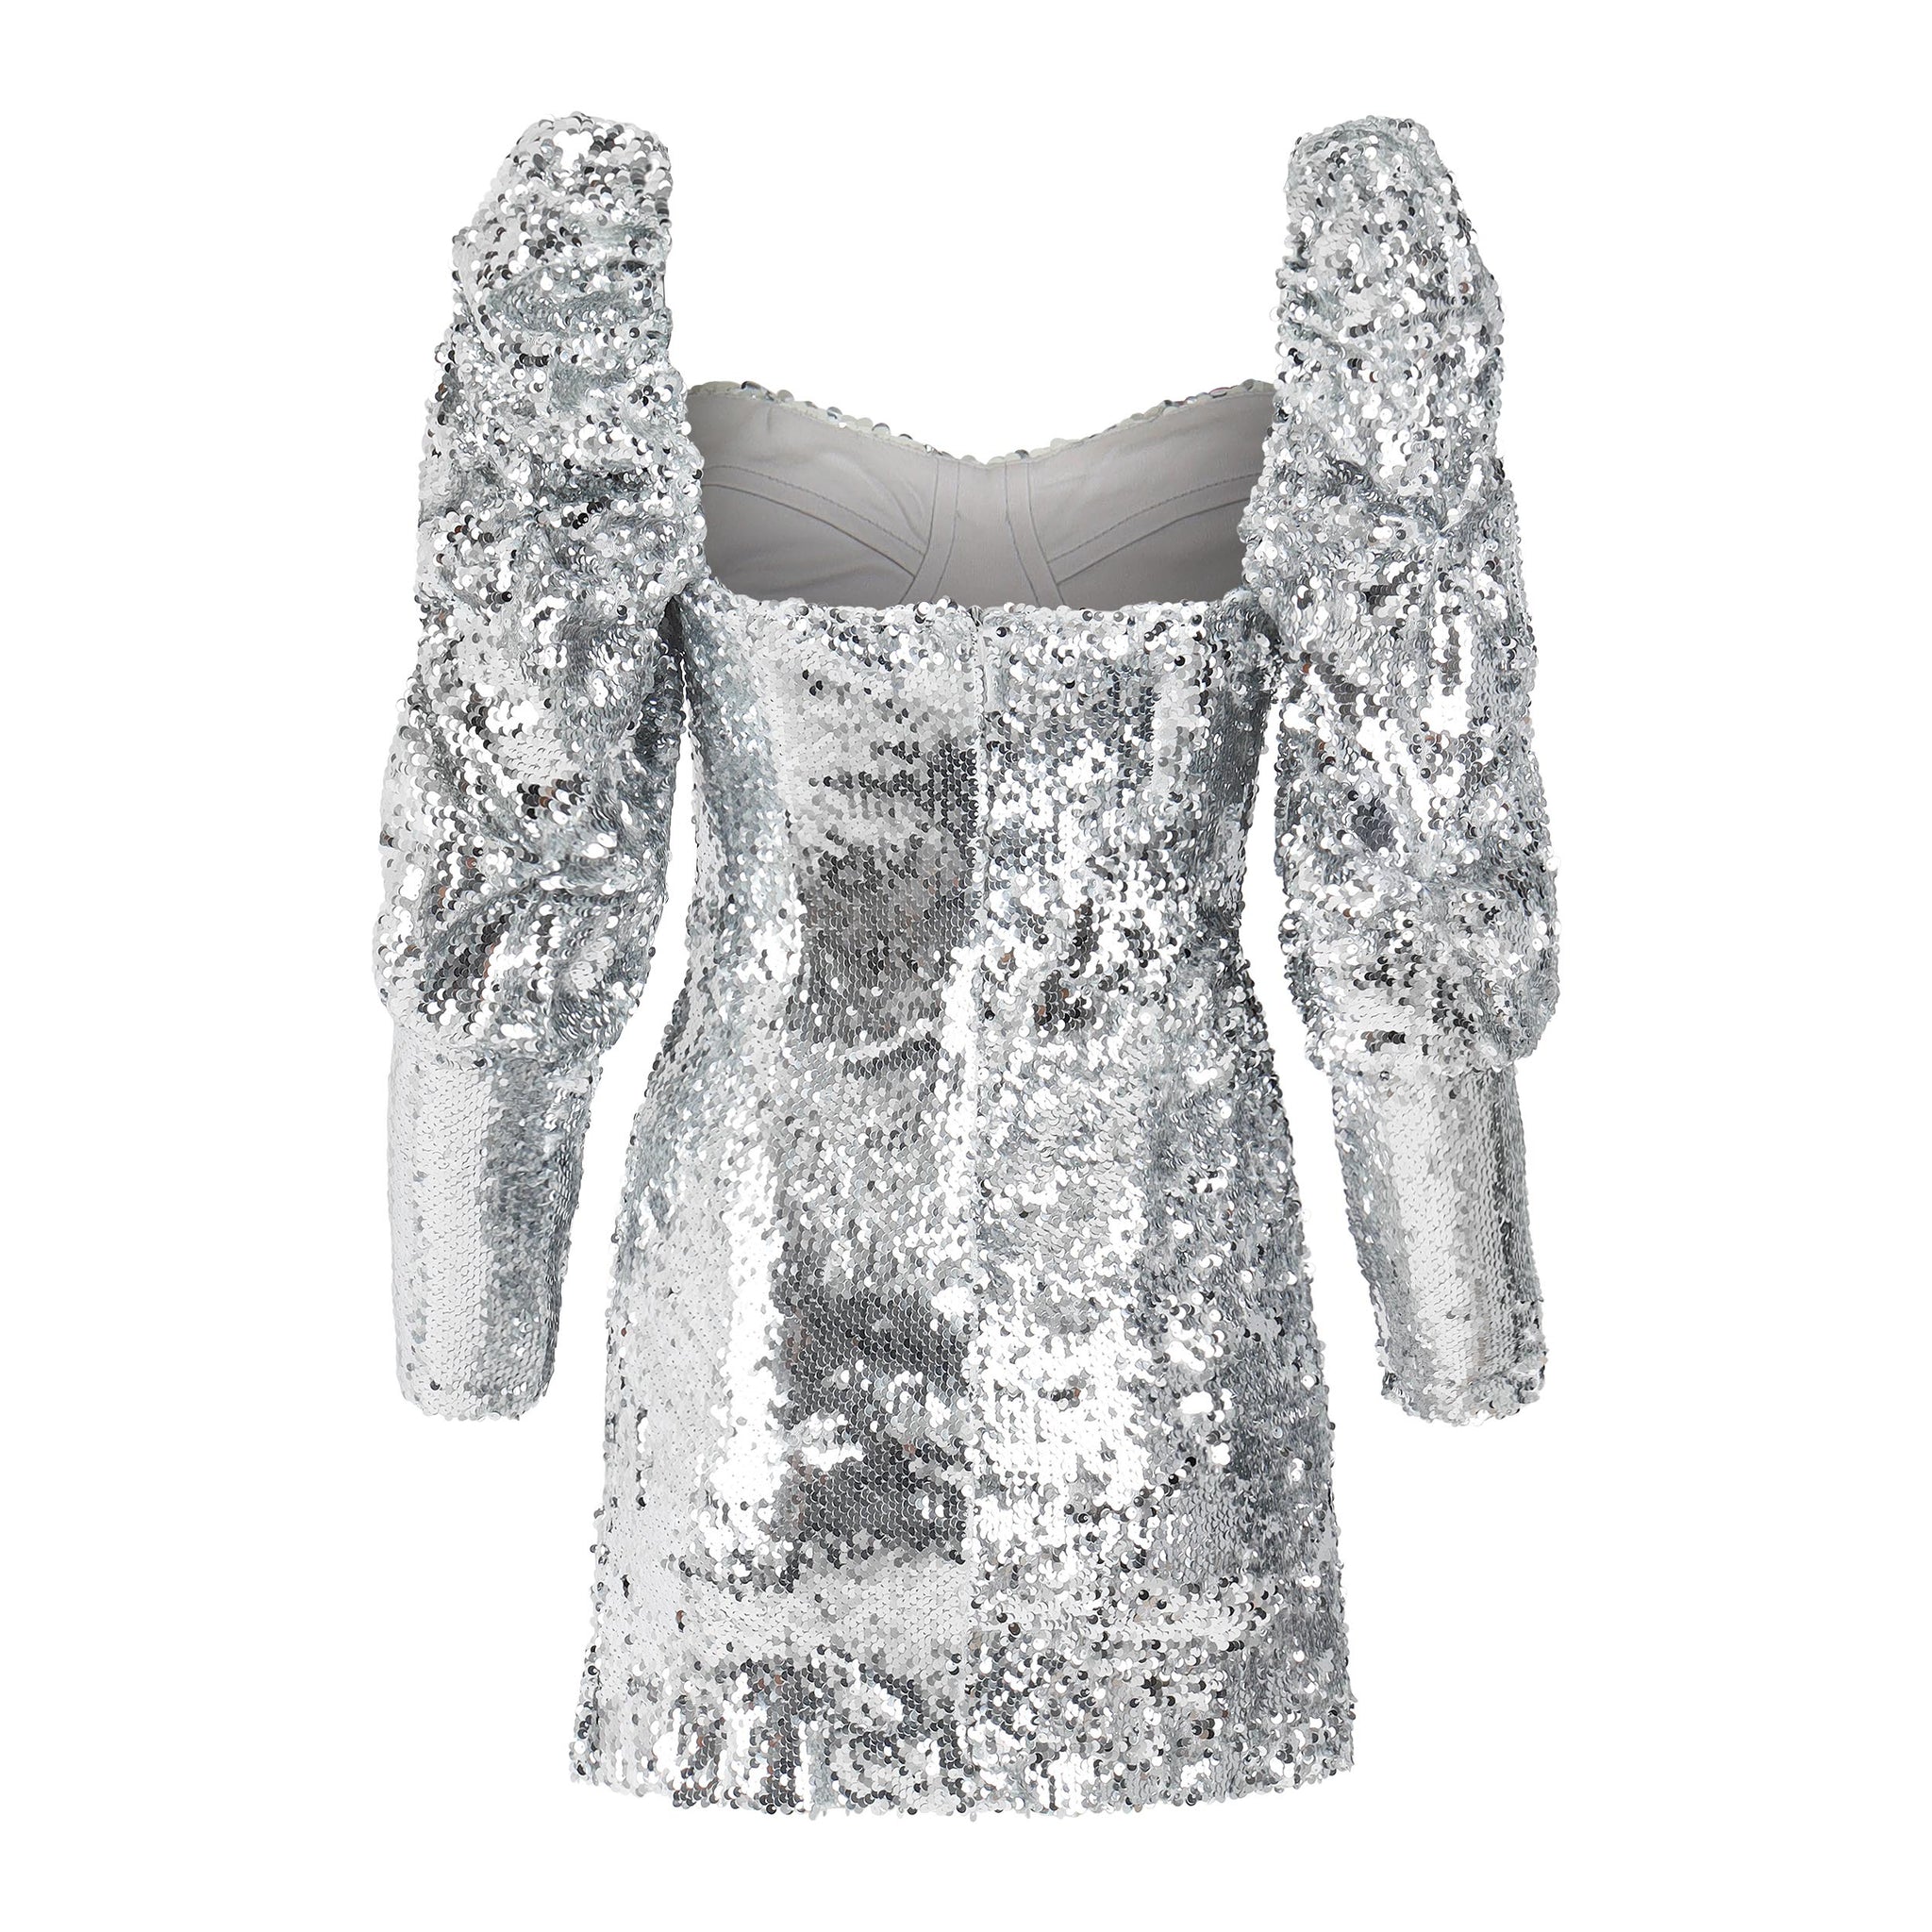 Shine Bright - Silver Sequins Dress